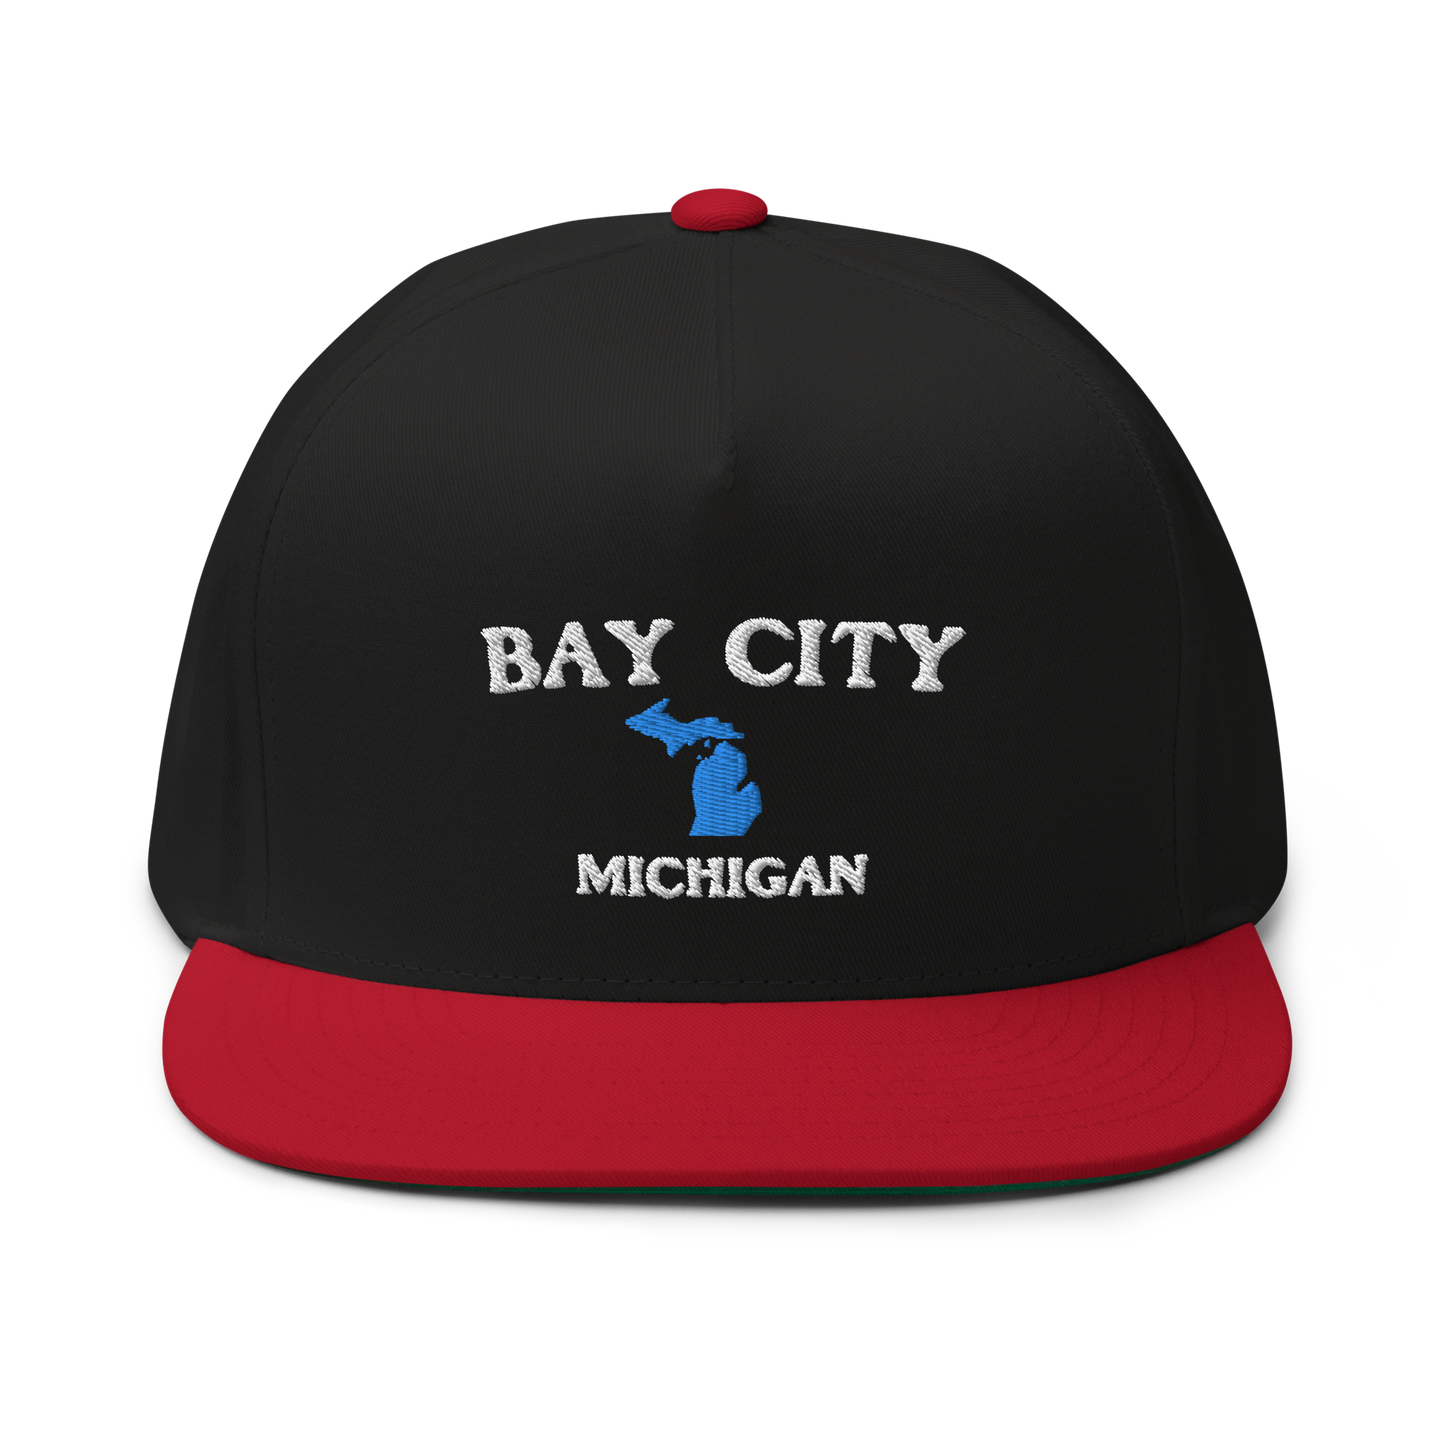 'Bay City Michigan' Flat Bill Snapback (w/ Michigan Outline)